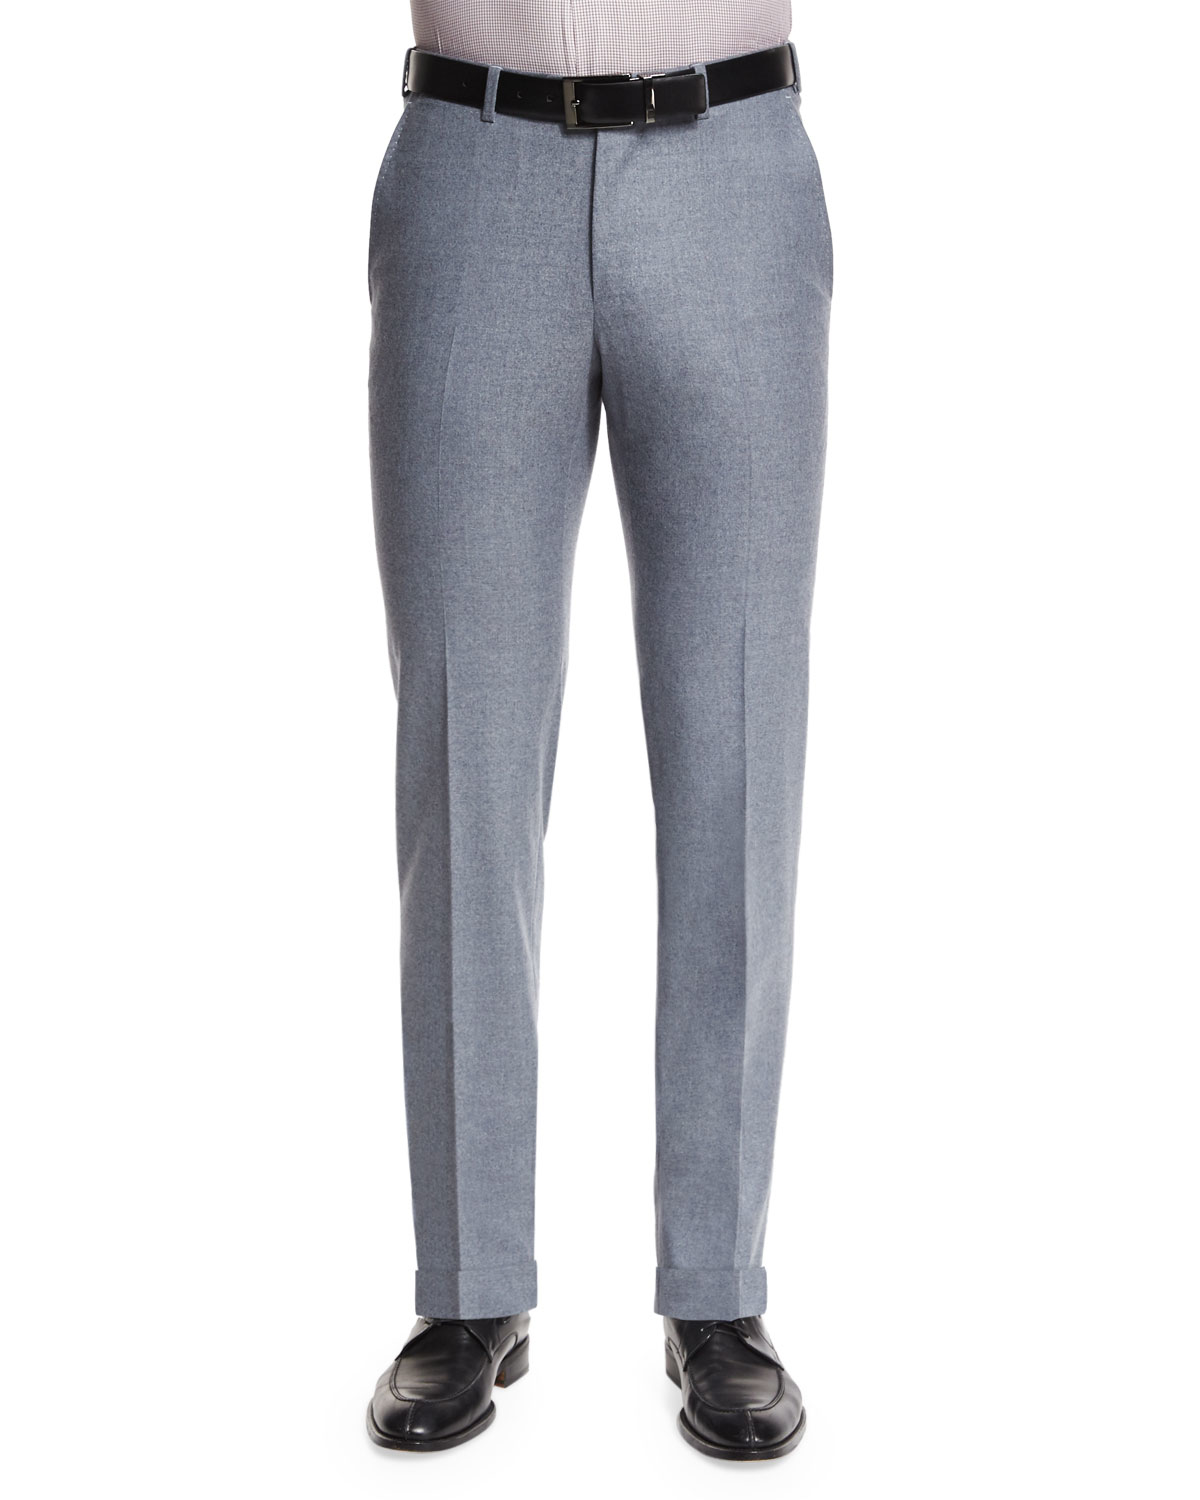 Lyst - Ermenegildo Zegna Flat-front Flannel Trousers in Gray for Men